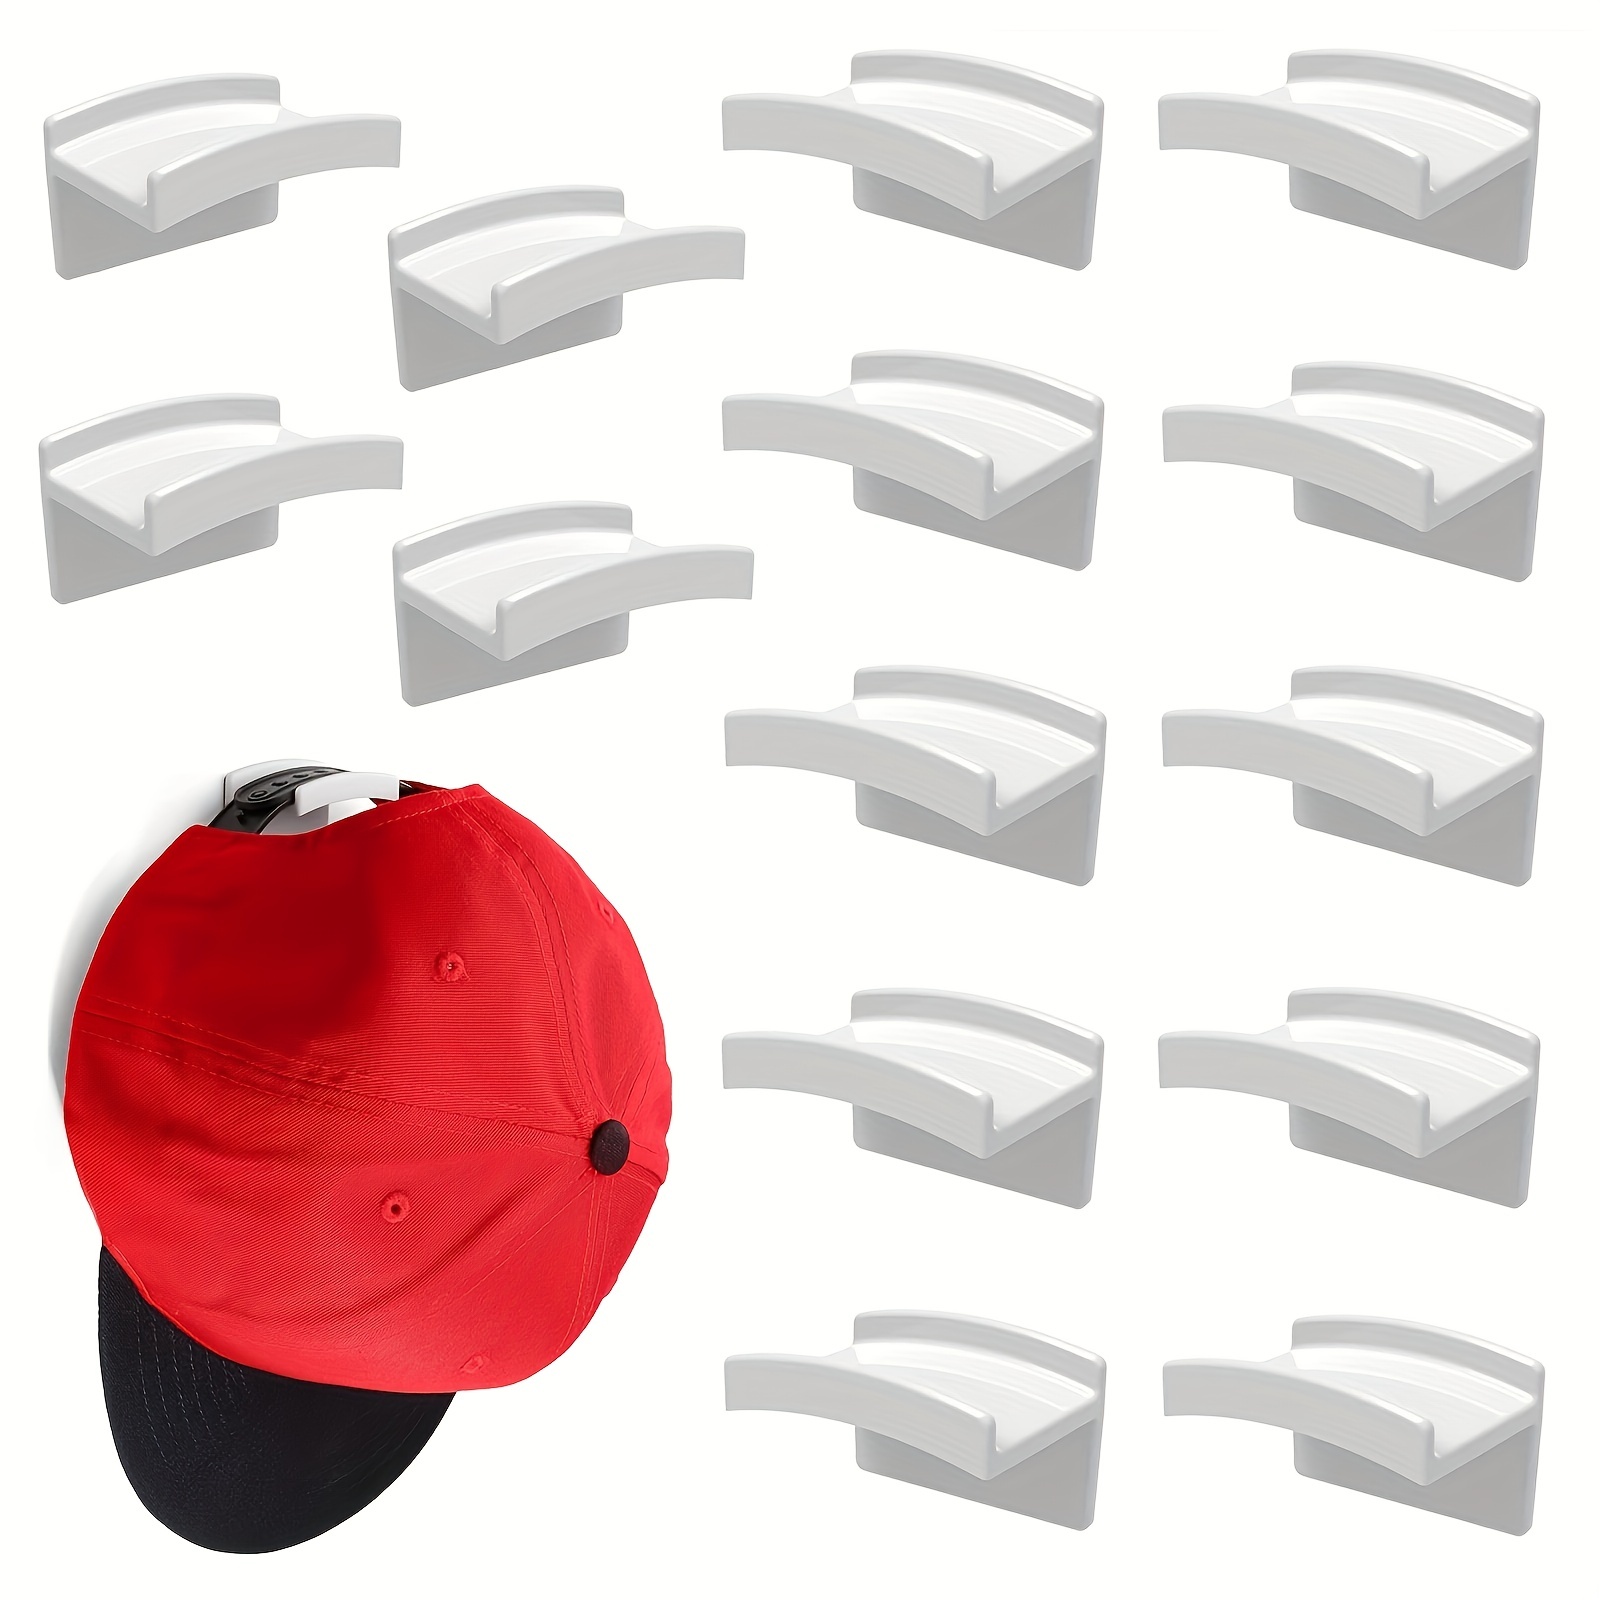 Colgador Gorras Adhesivo Montado en Pared, Paquete de 10 Ganchos  Minimalistas Negros Organizador Gorras Gancho de Plástico para Sombreros  con 2